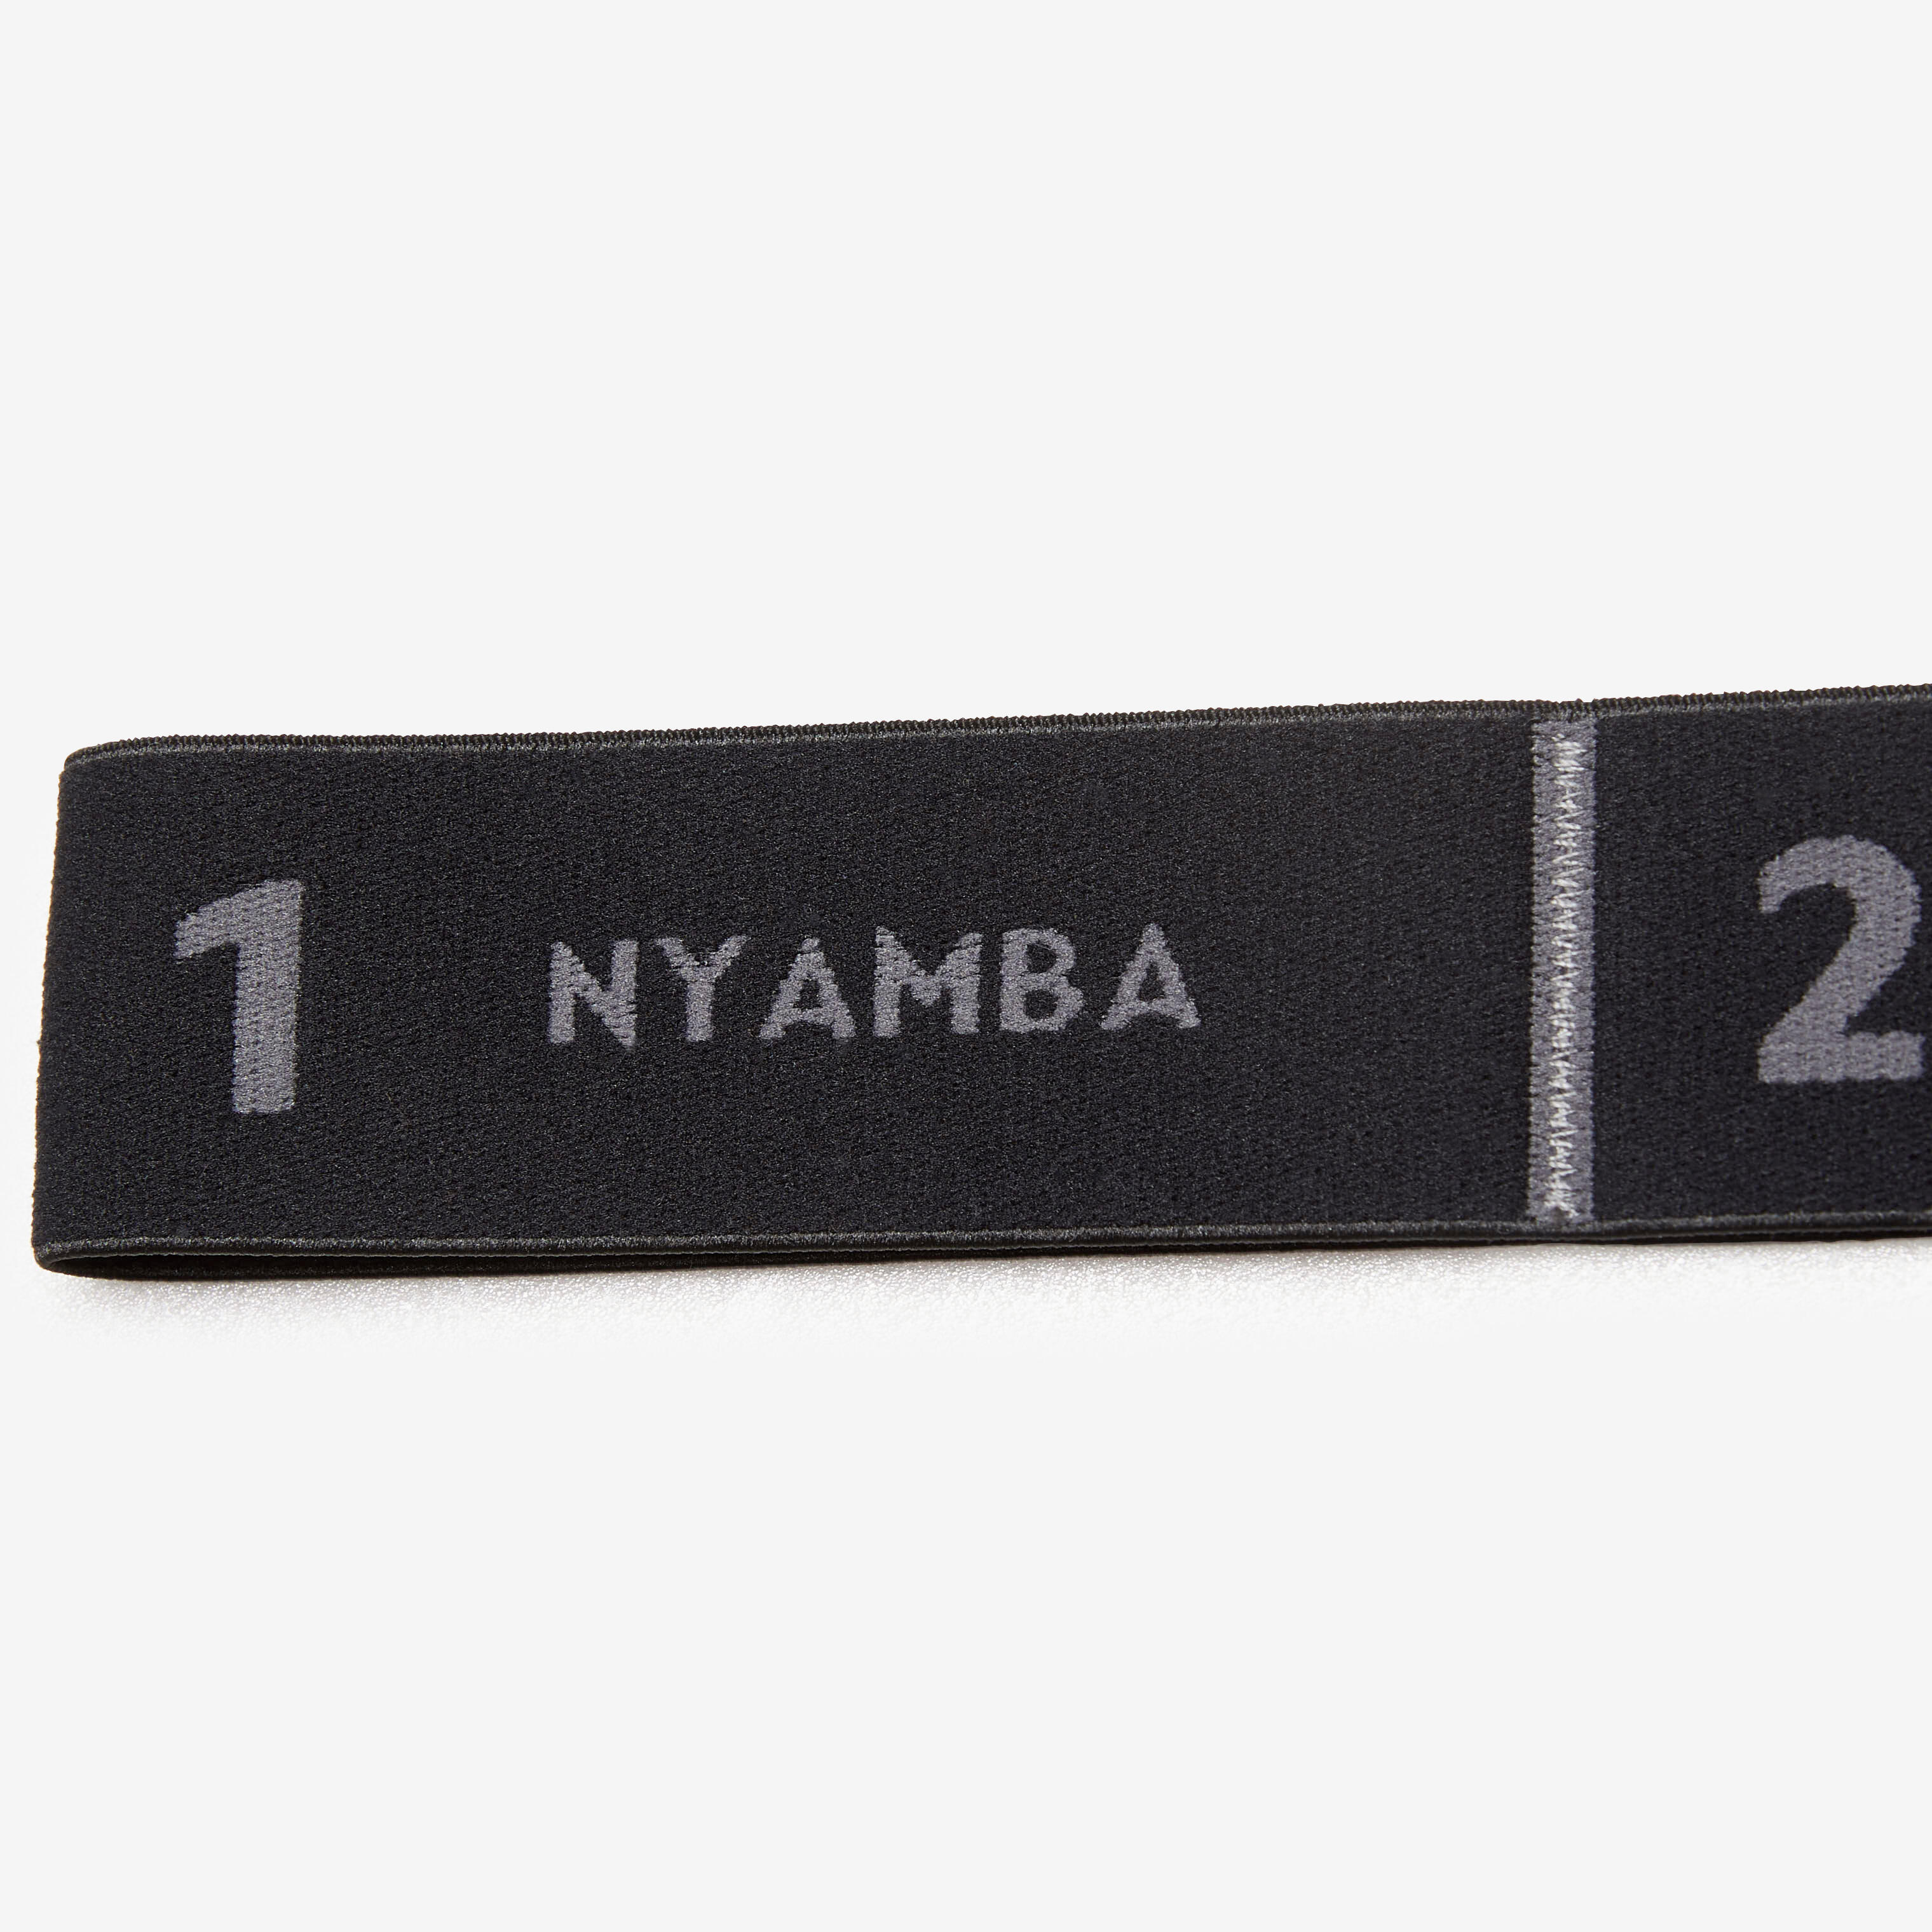 Decathlon Pilates Yoga Flexband / Resistance Band (2kg) - Nyamba